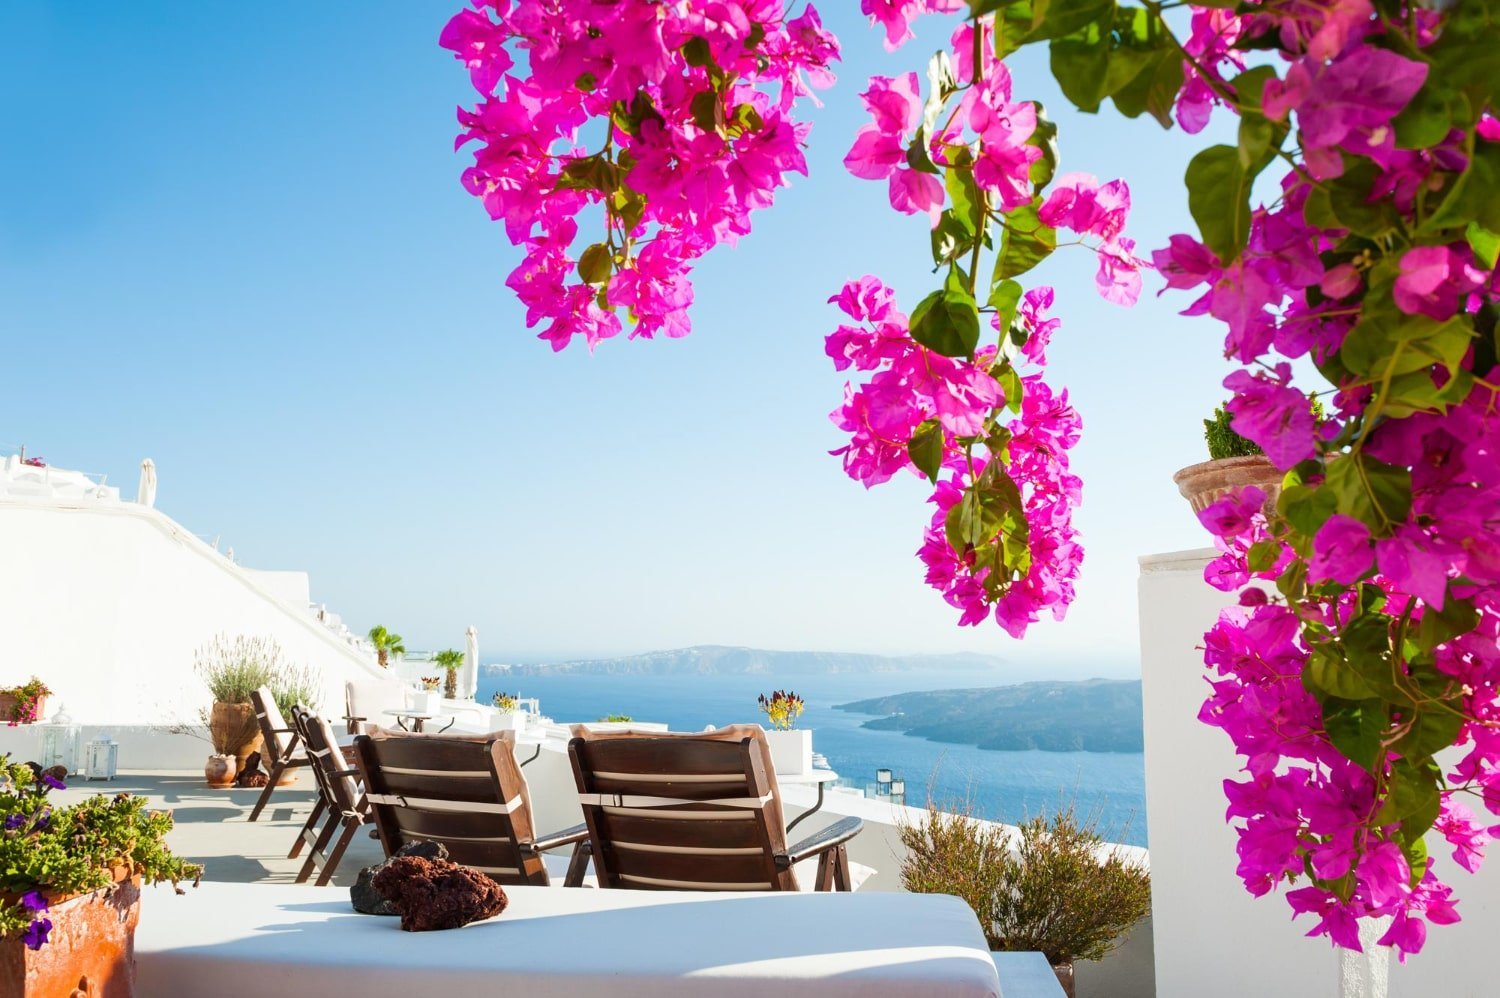 greek island sunbeds sea view flowers